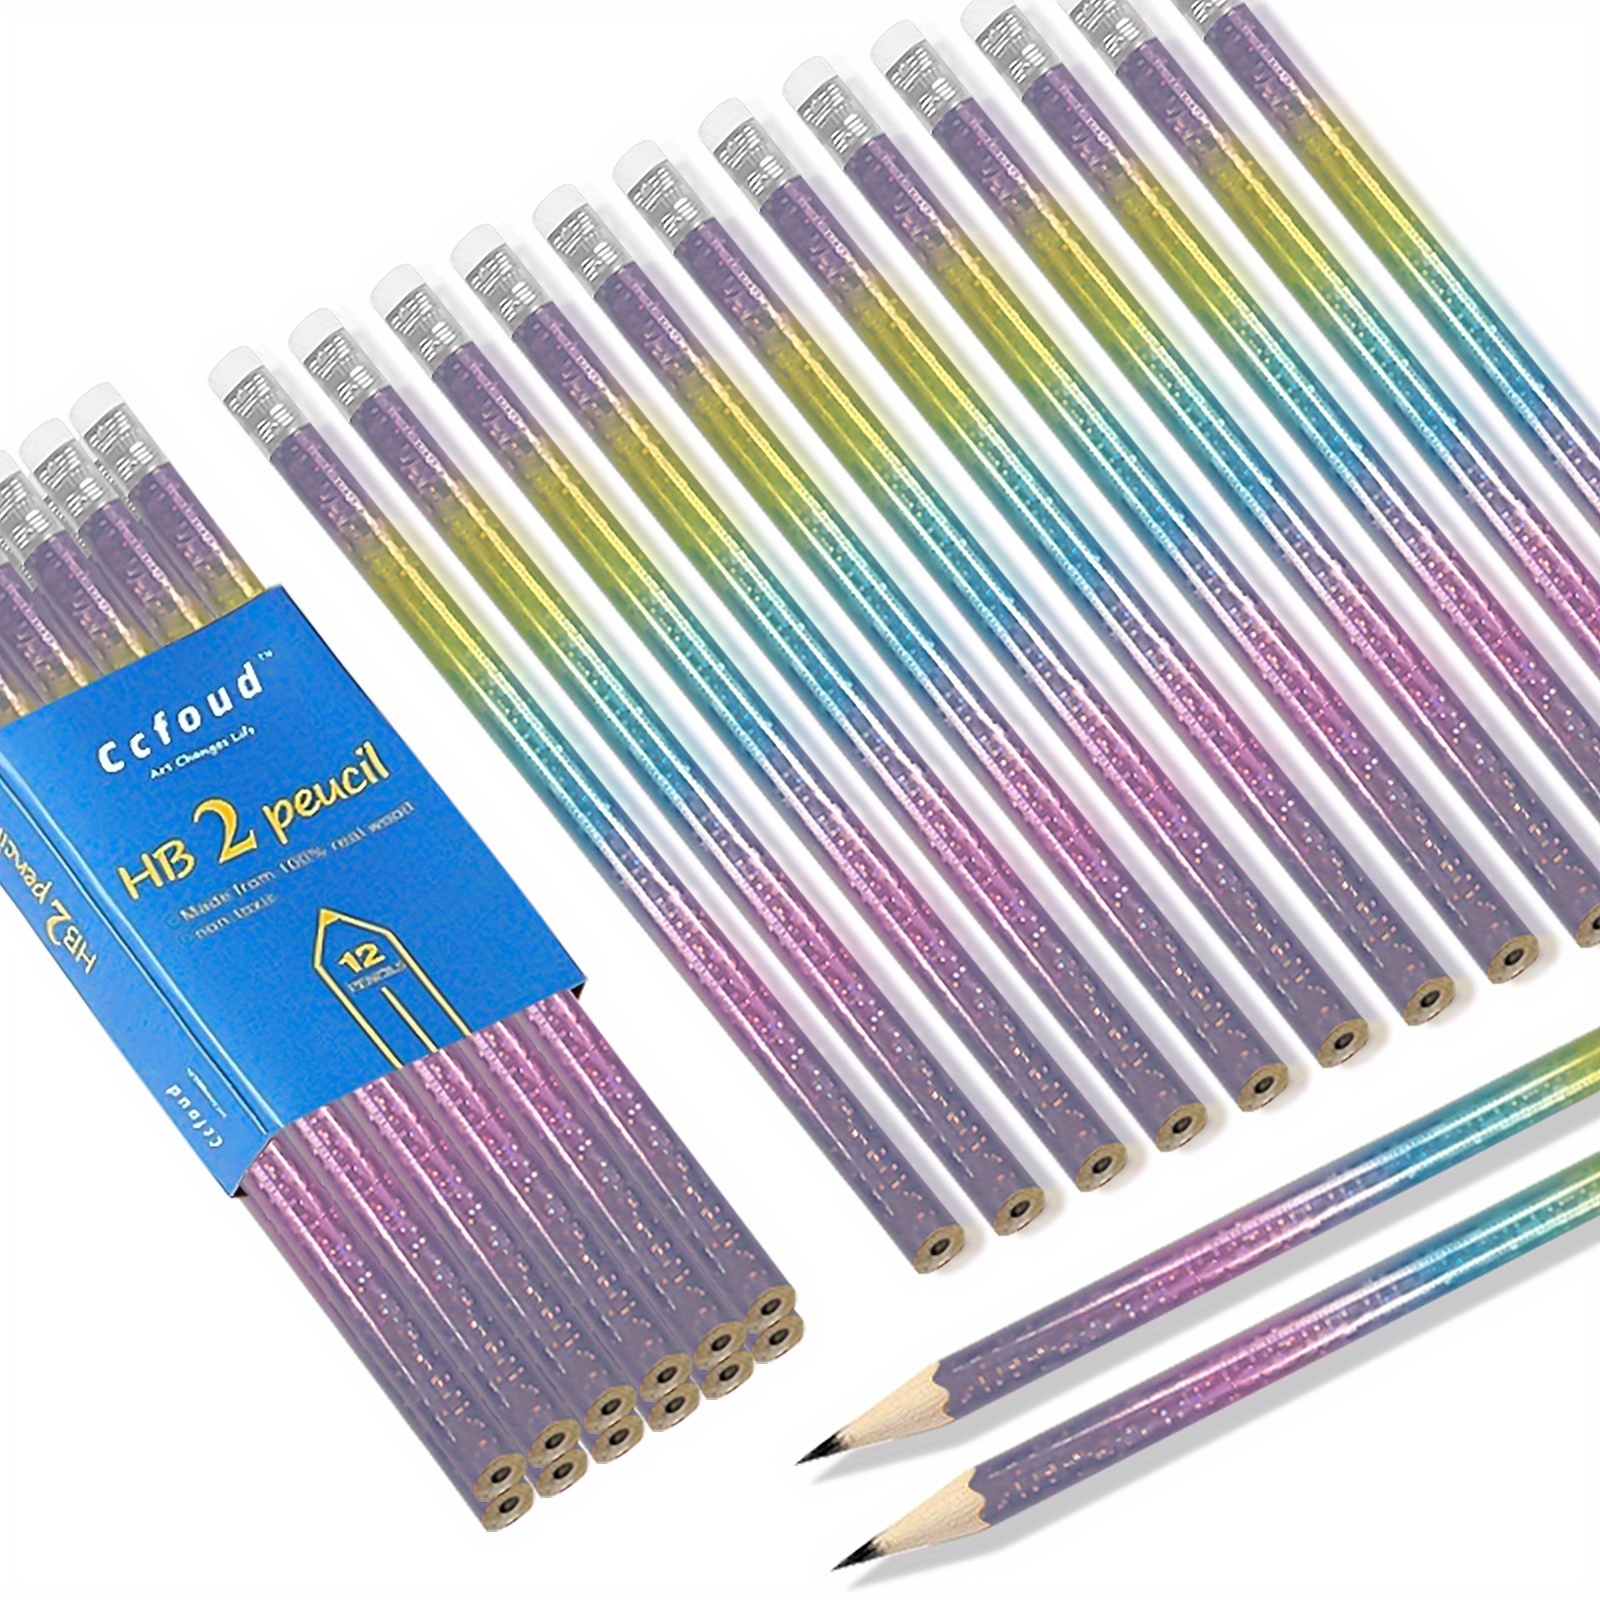 12Pcs HB Pencils with Eraser, Writing Pencils Graphite Pencils for